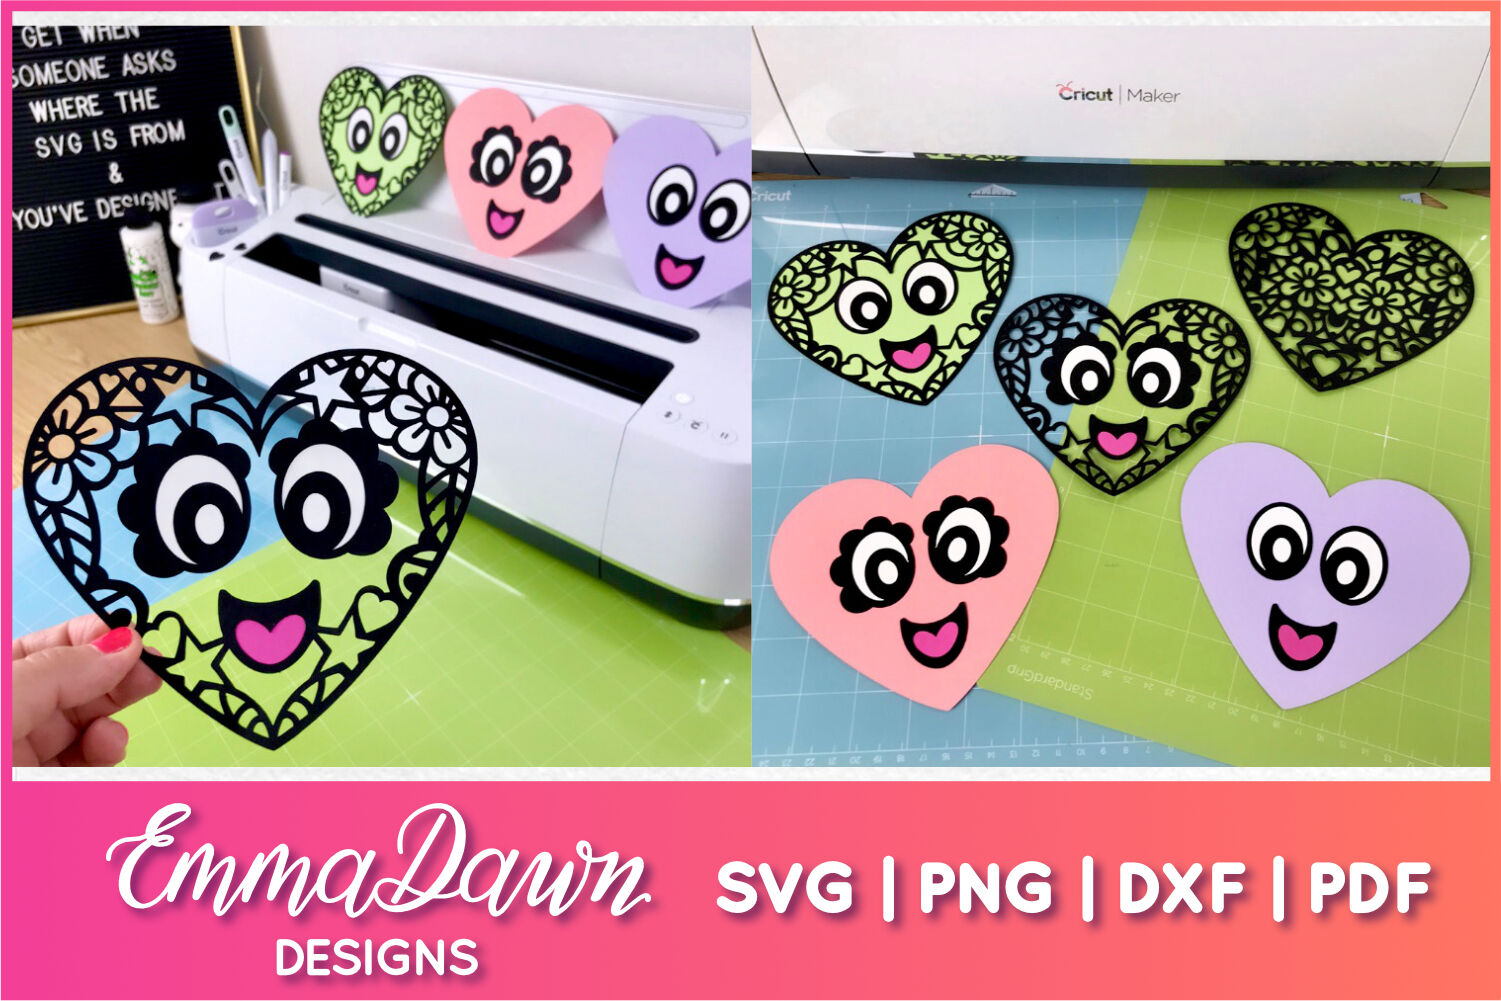 Download Lexi Levi The Love Hearts Valentines Day Mandala Svg Design By Emma Dawn Designs Thehungryjpeg Com